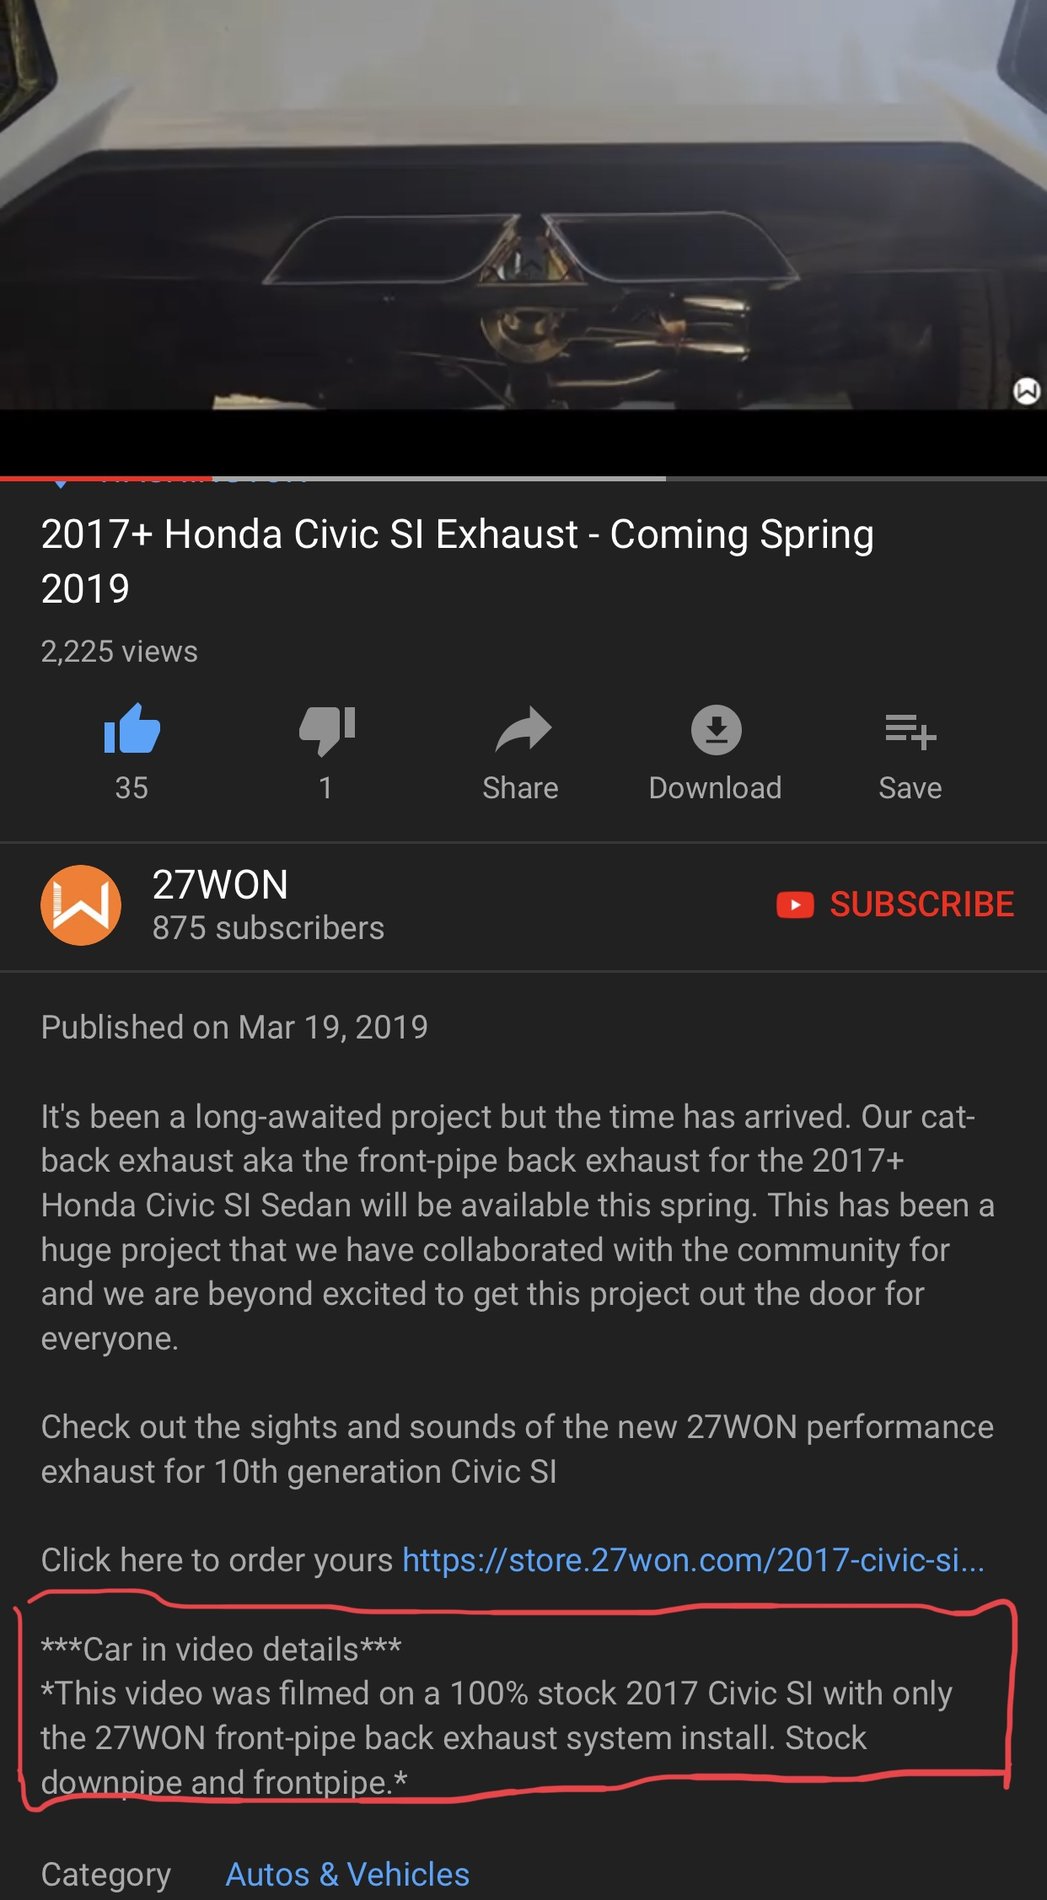 11th Gen Honda Civic Civic SI Catback Exhaust now available 27WON D7B54D07-C6F4-46E8-9EA0-B21BEB64FBE0